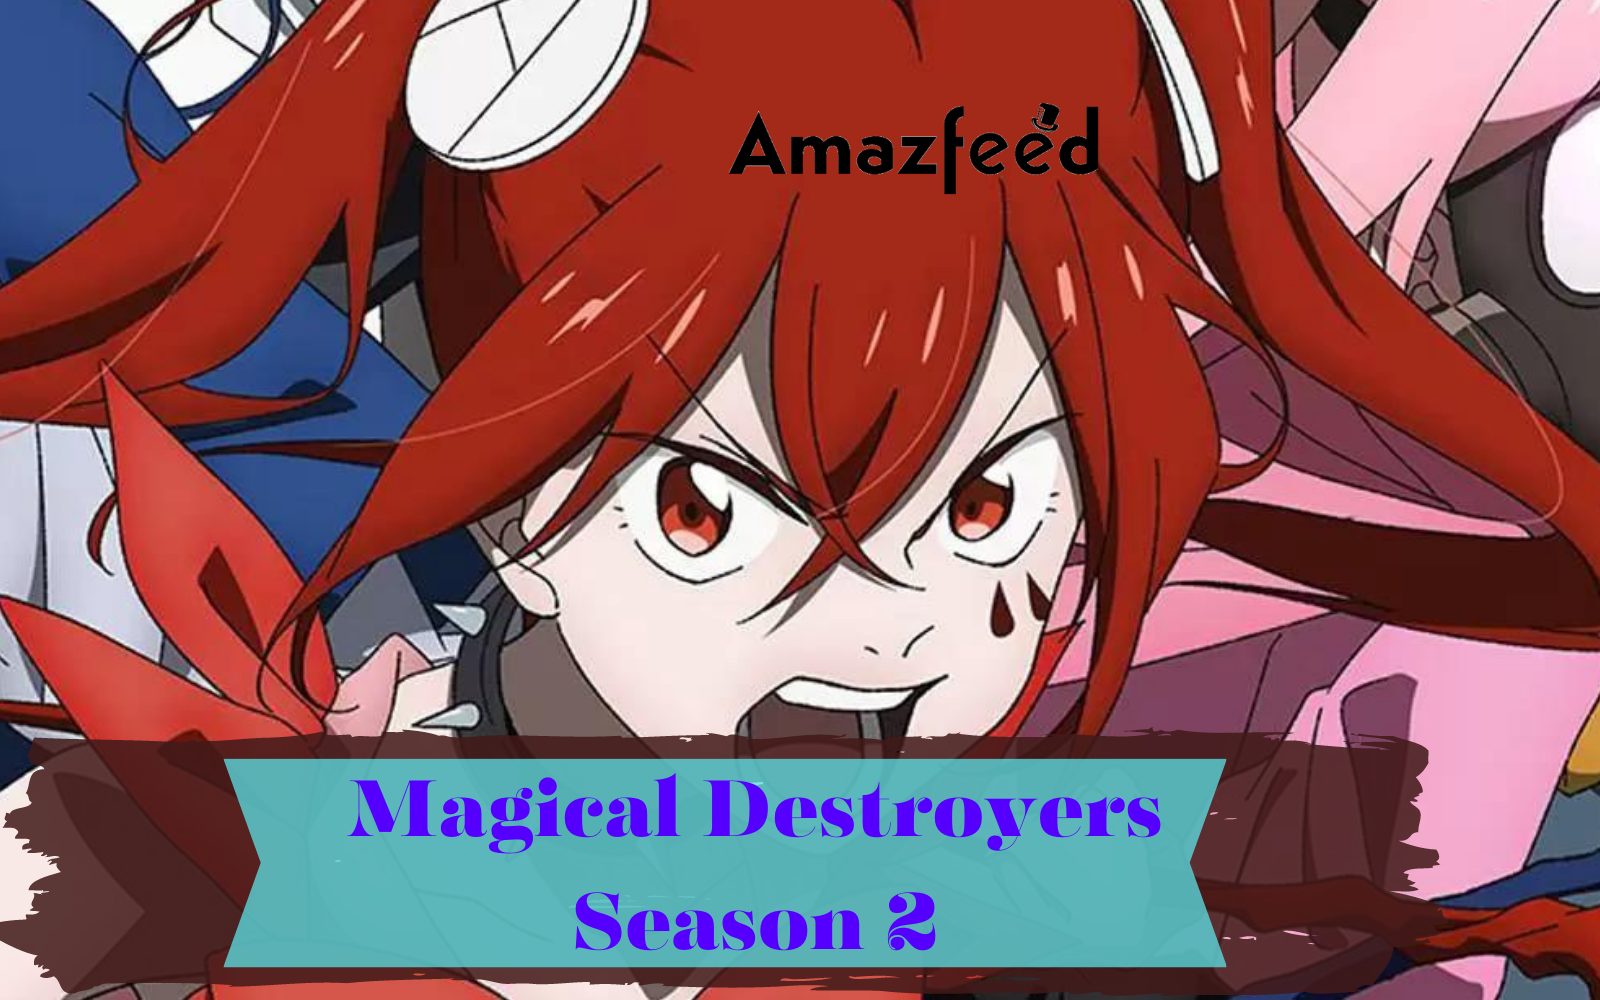 Is Mahou Shoujo Magical Destroyers AKA Magical Destroyers Season 2